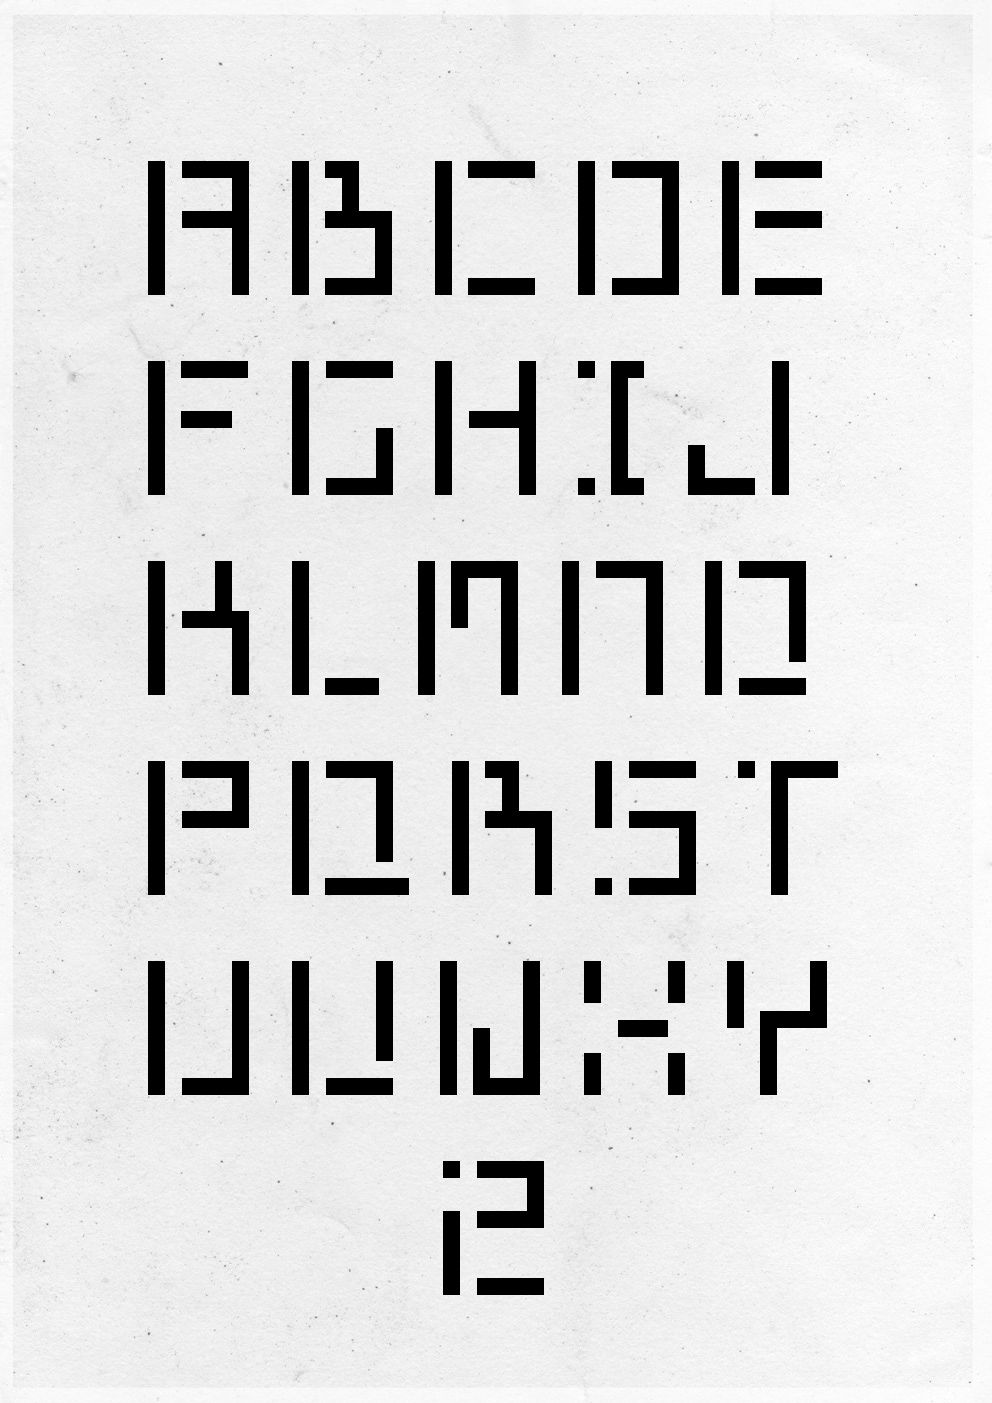 mies ludwig Van der Rohe typo font print poster plakat germany free